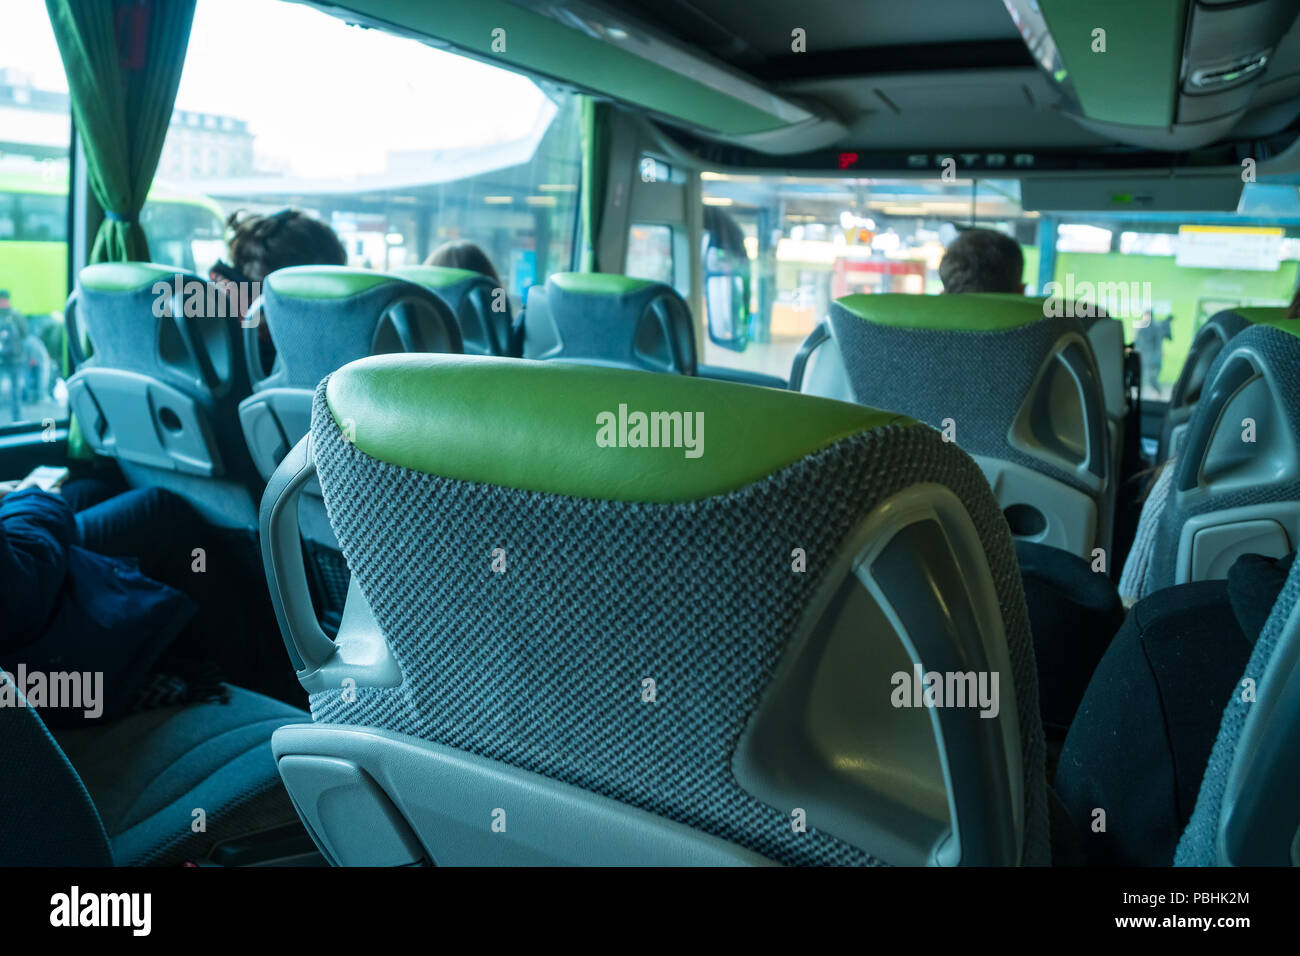 Travel Bus Interior Seats Stock Photos Travel Bus Interior